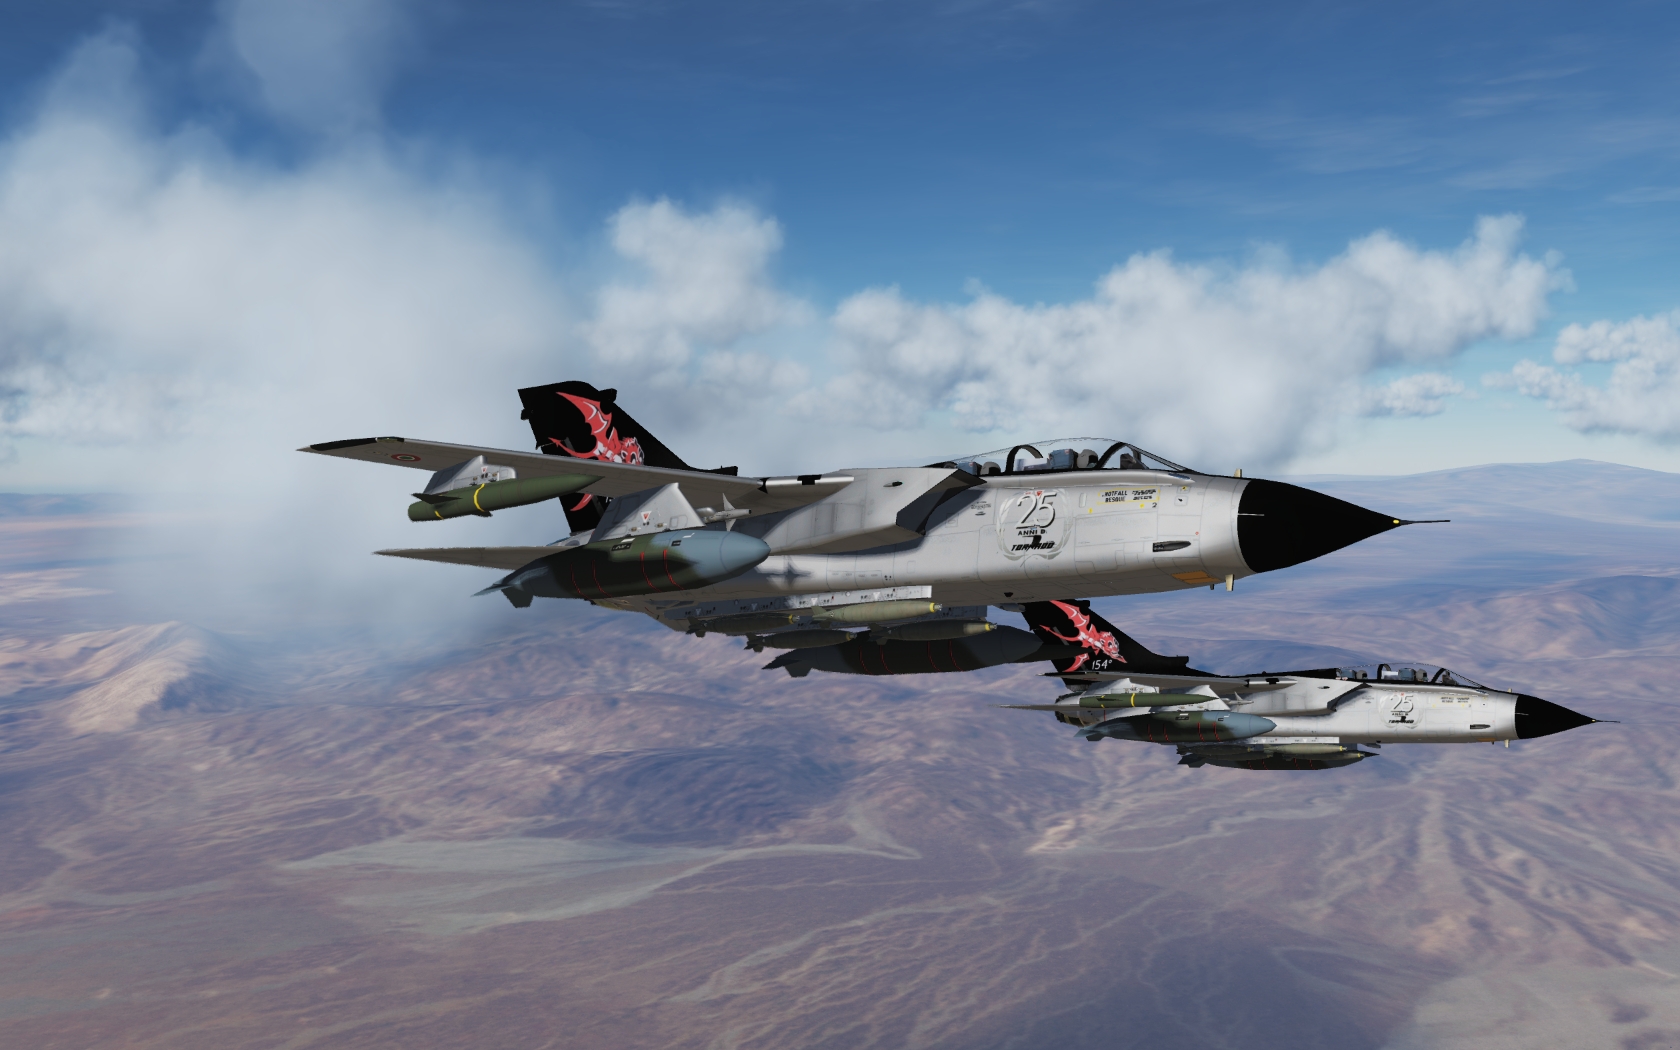 DCS WORLD 米格21比斯 + 米格29 + Tornado + A-10  混战游戏截图-8322 